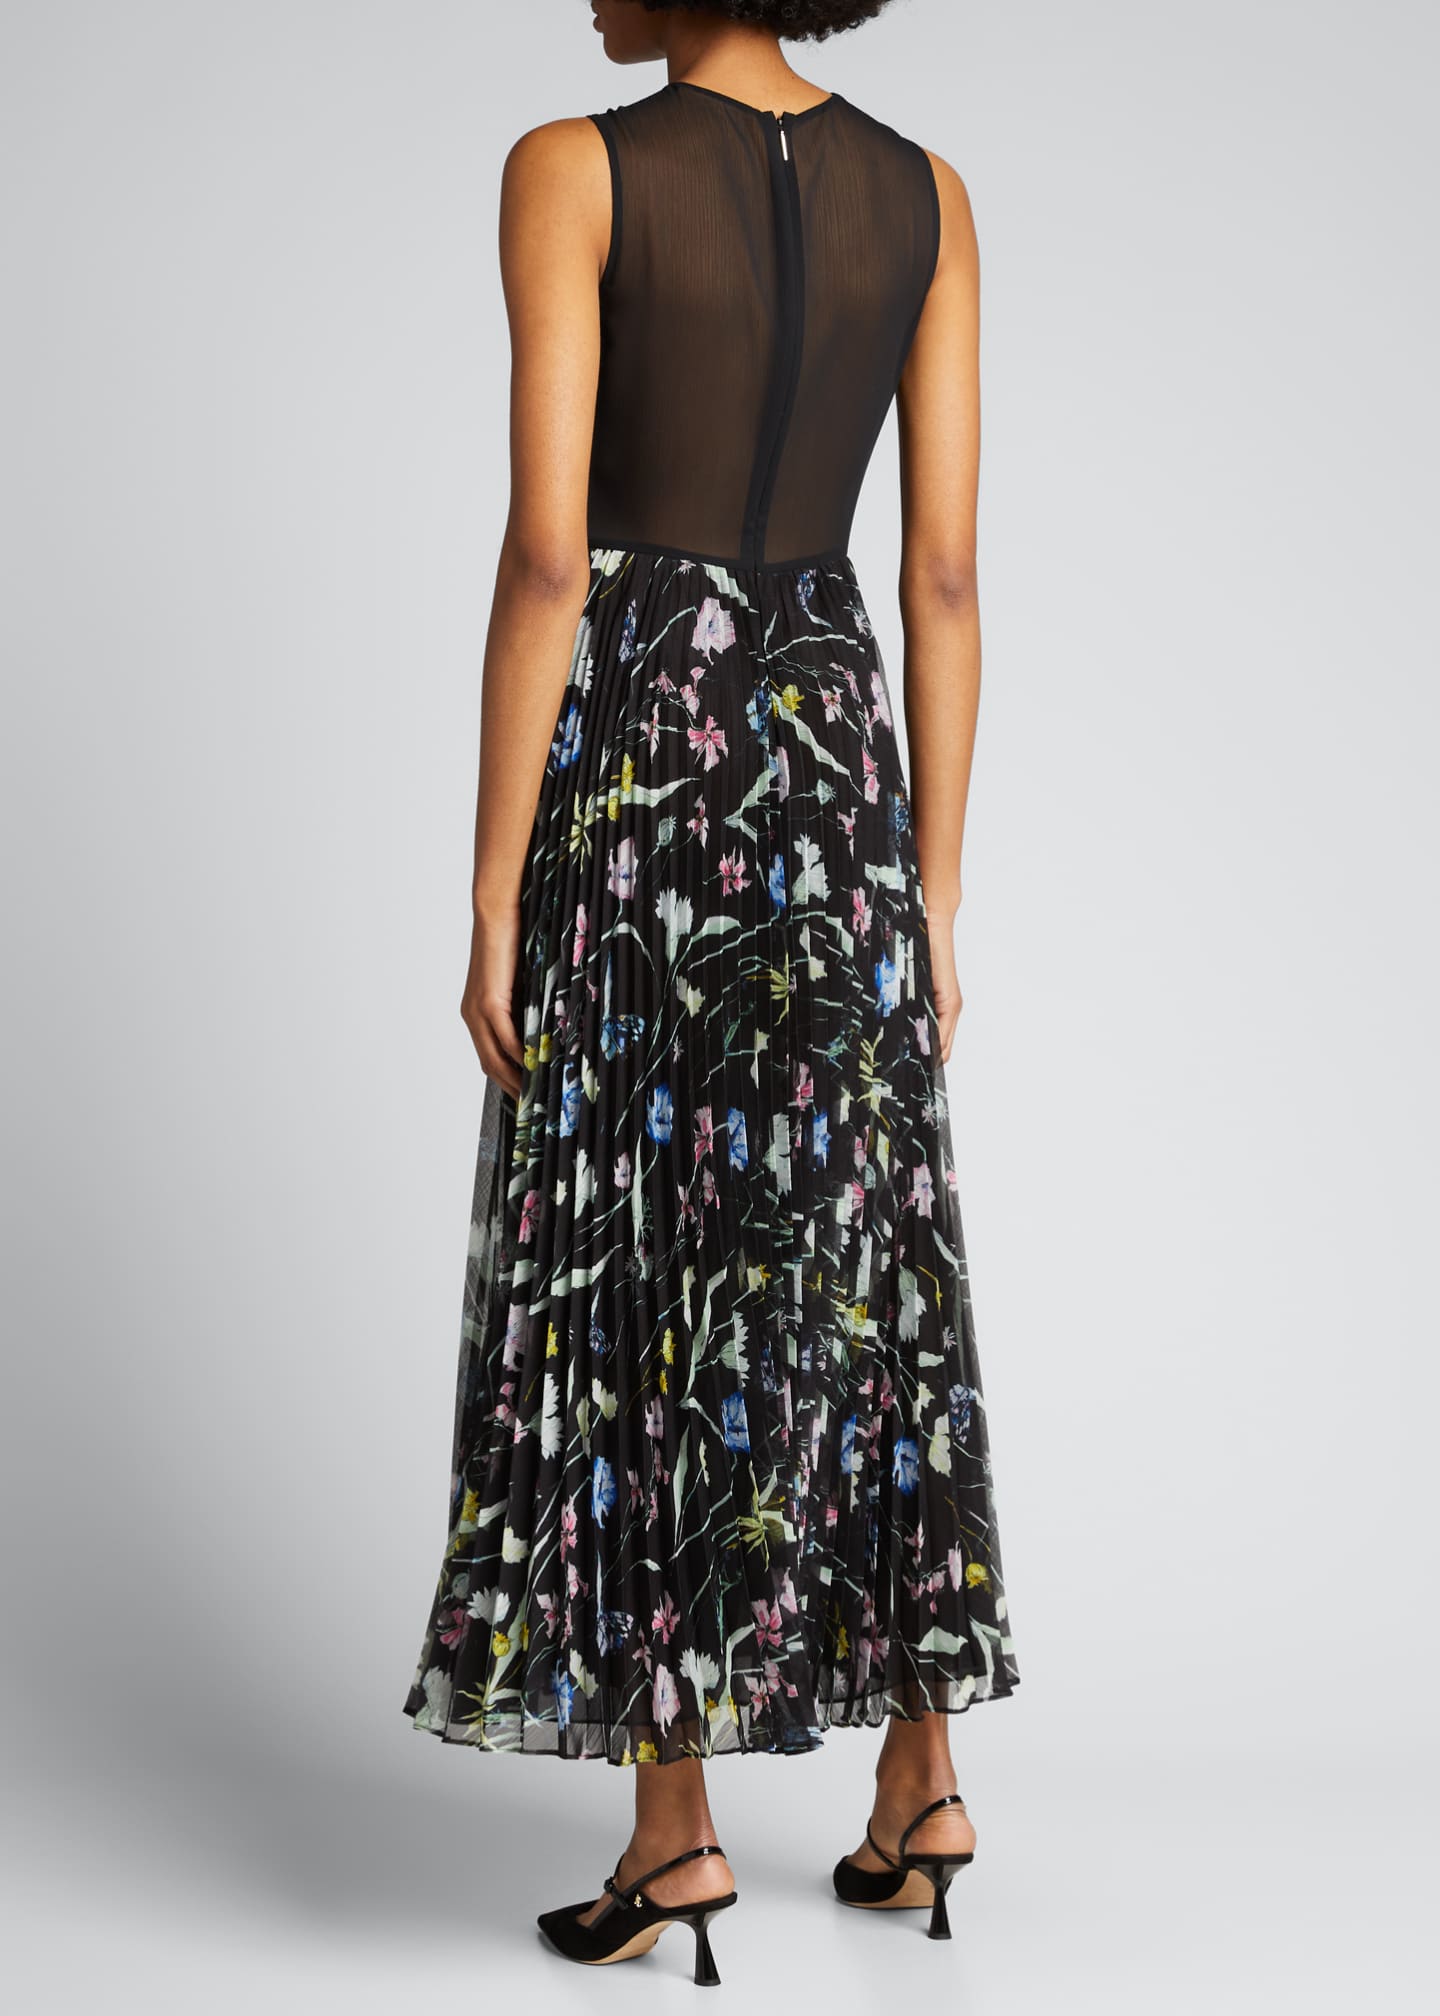 Jason Wu Collection Sleeveless Floral Pleated Midi Dress - Bergdorf Goodman